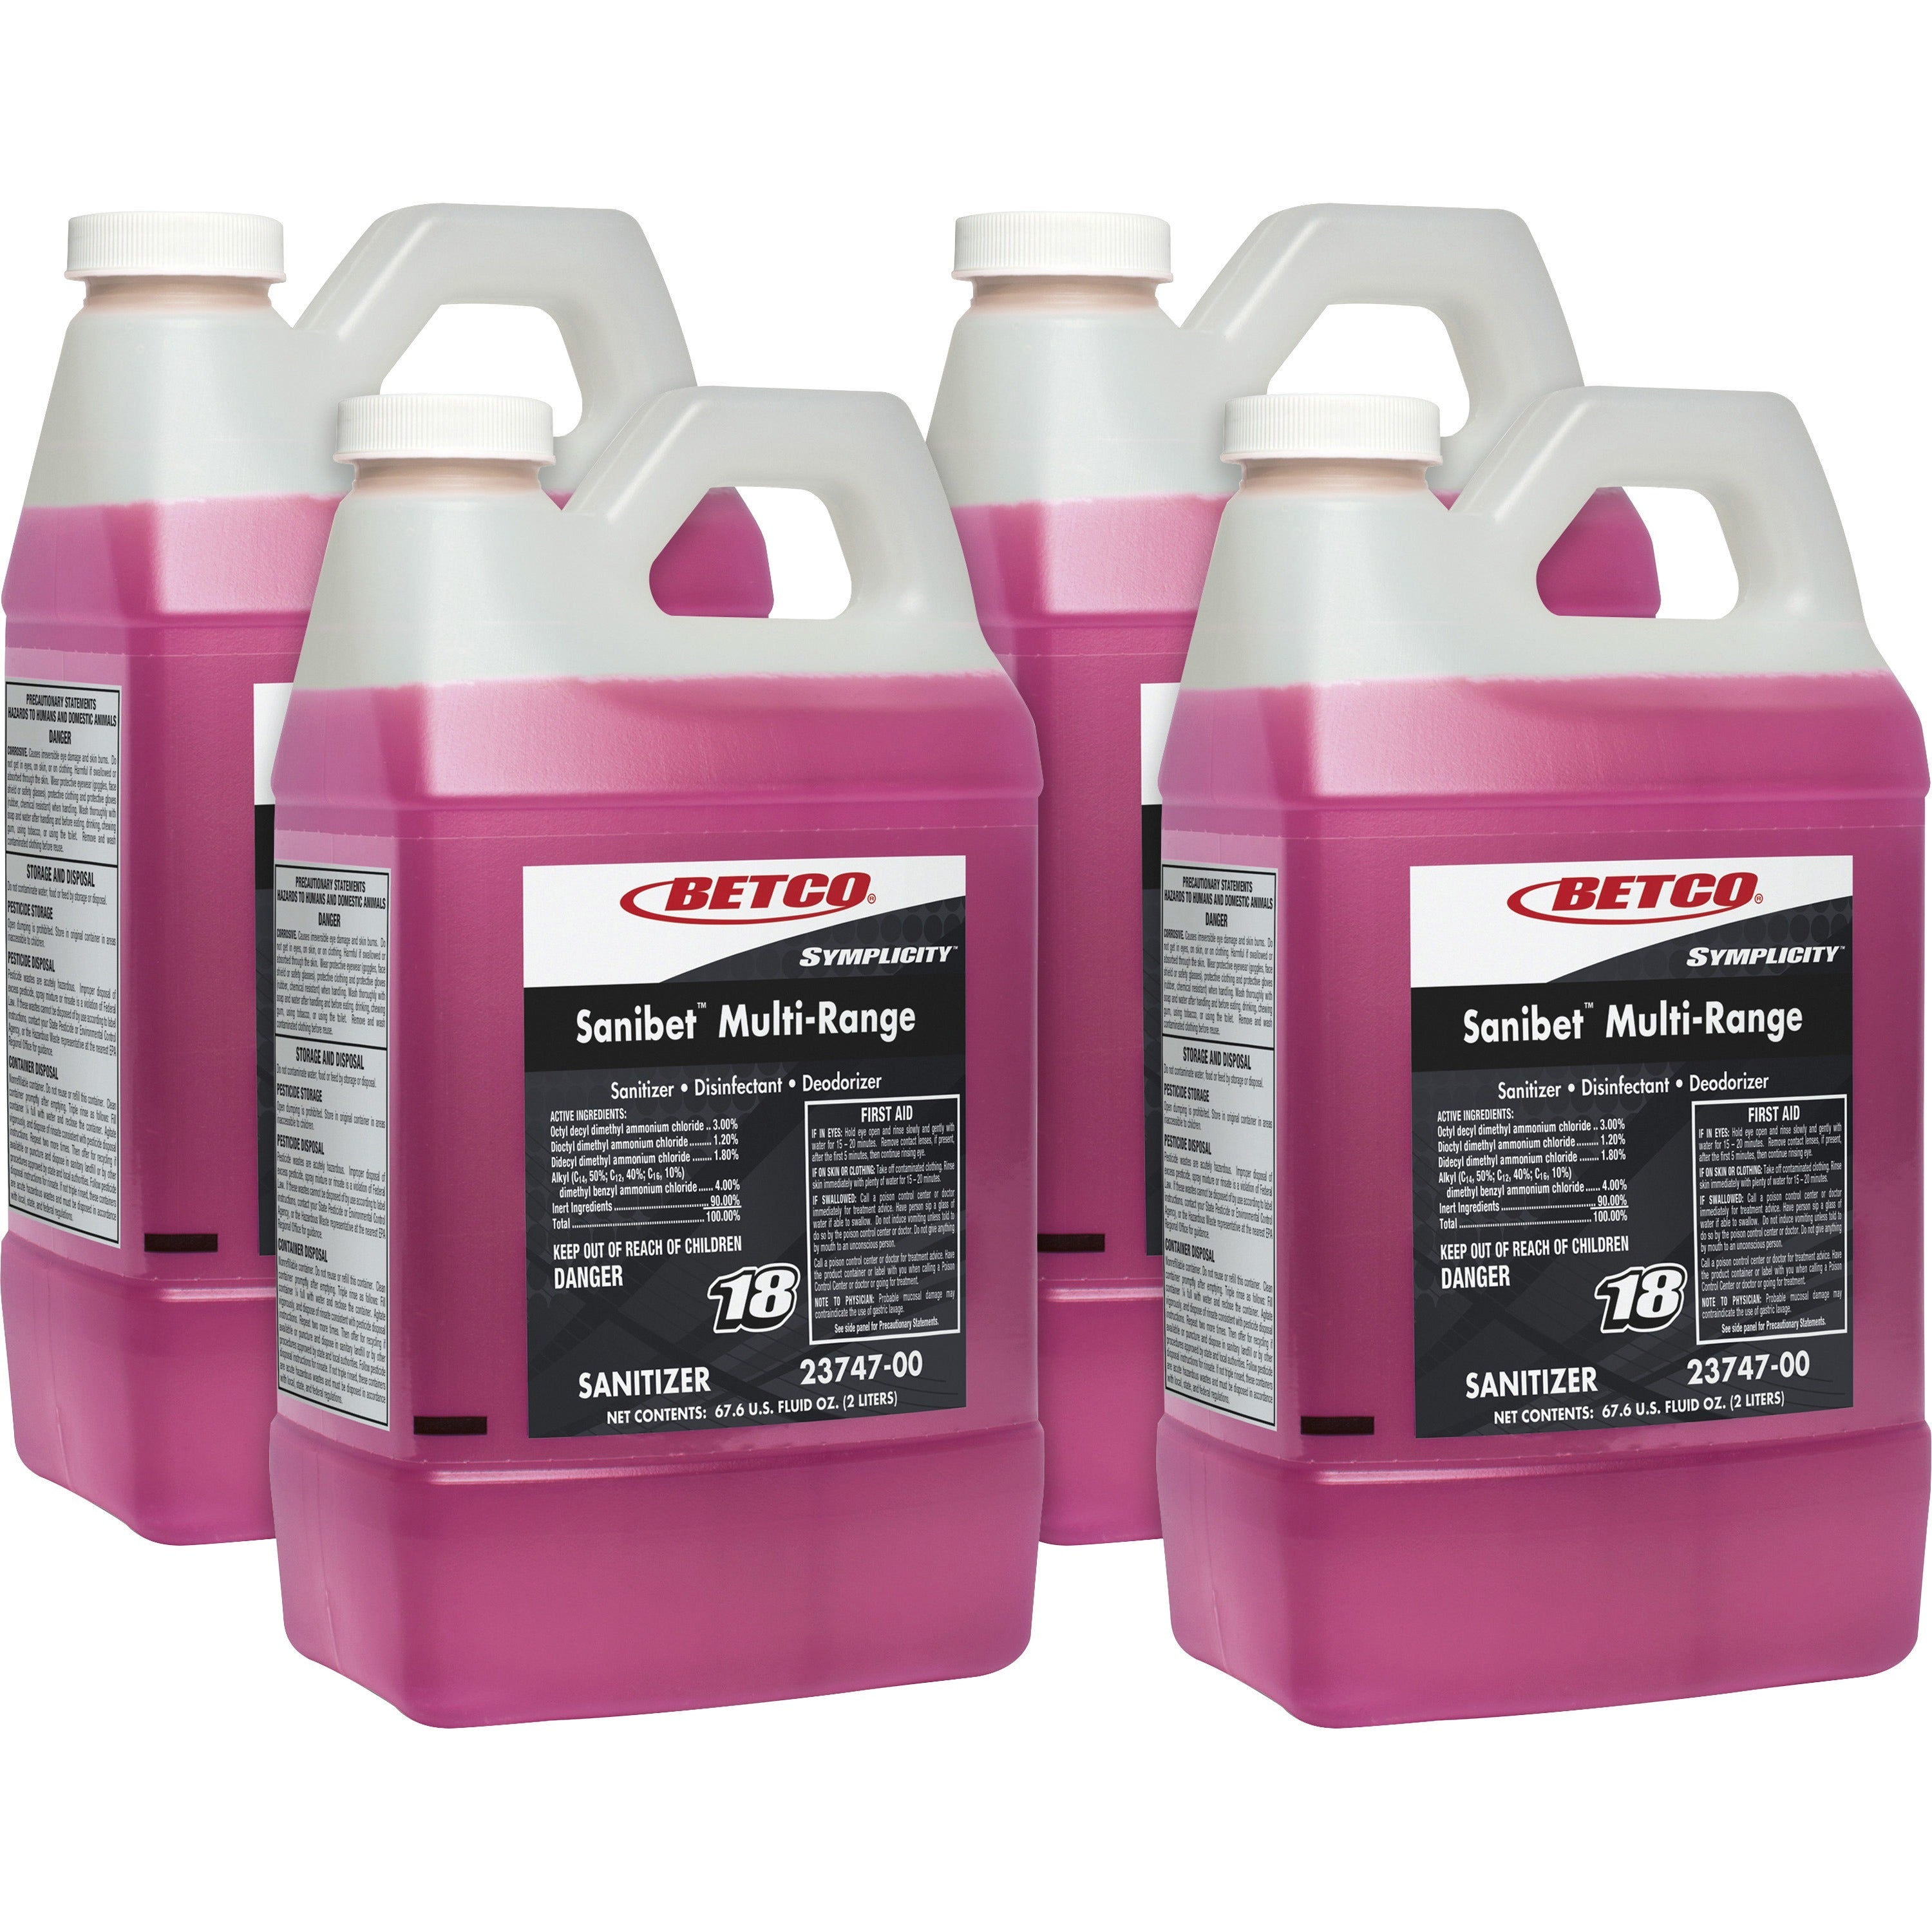 Betco Symplicity Sanibet Multi-Range Sanitizer - FASTDRAW 18 - Concentrate - 67.6 fl oz (2.1 quart) - 4 / Carton - Rinse-free, Versatile, Disinfectant - Pink - 1